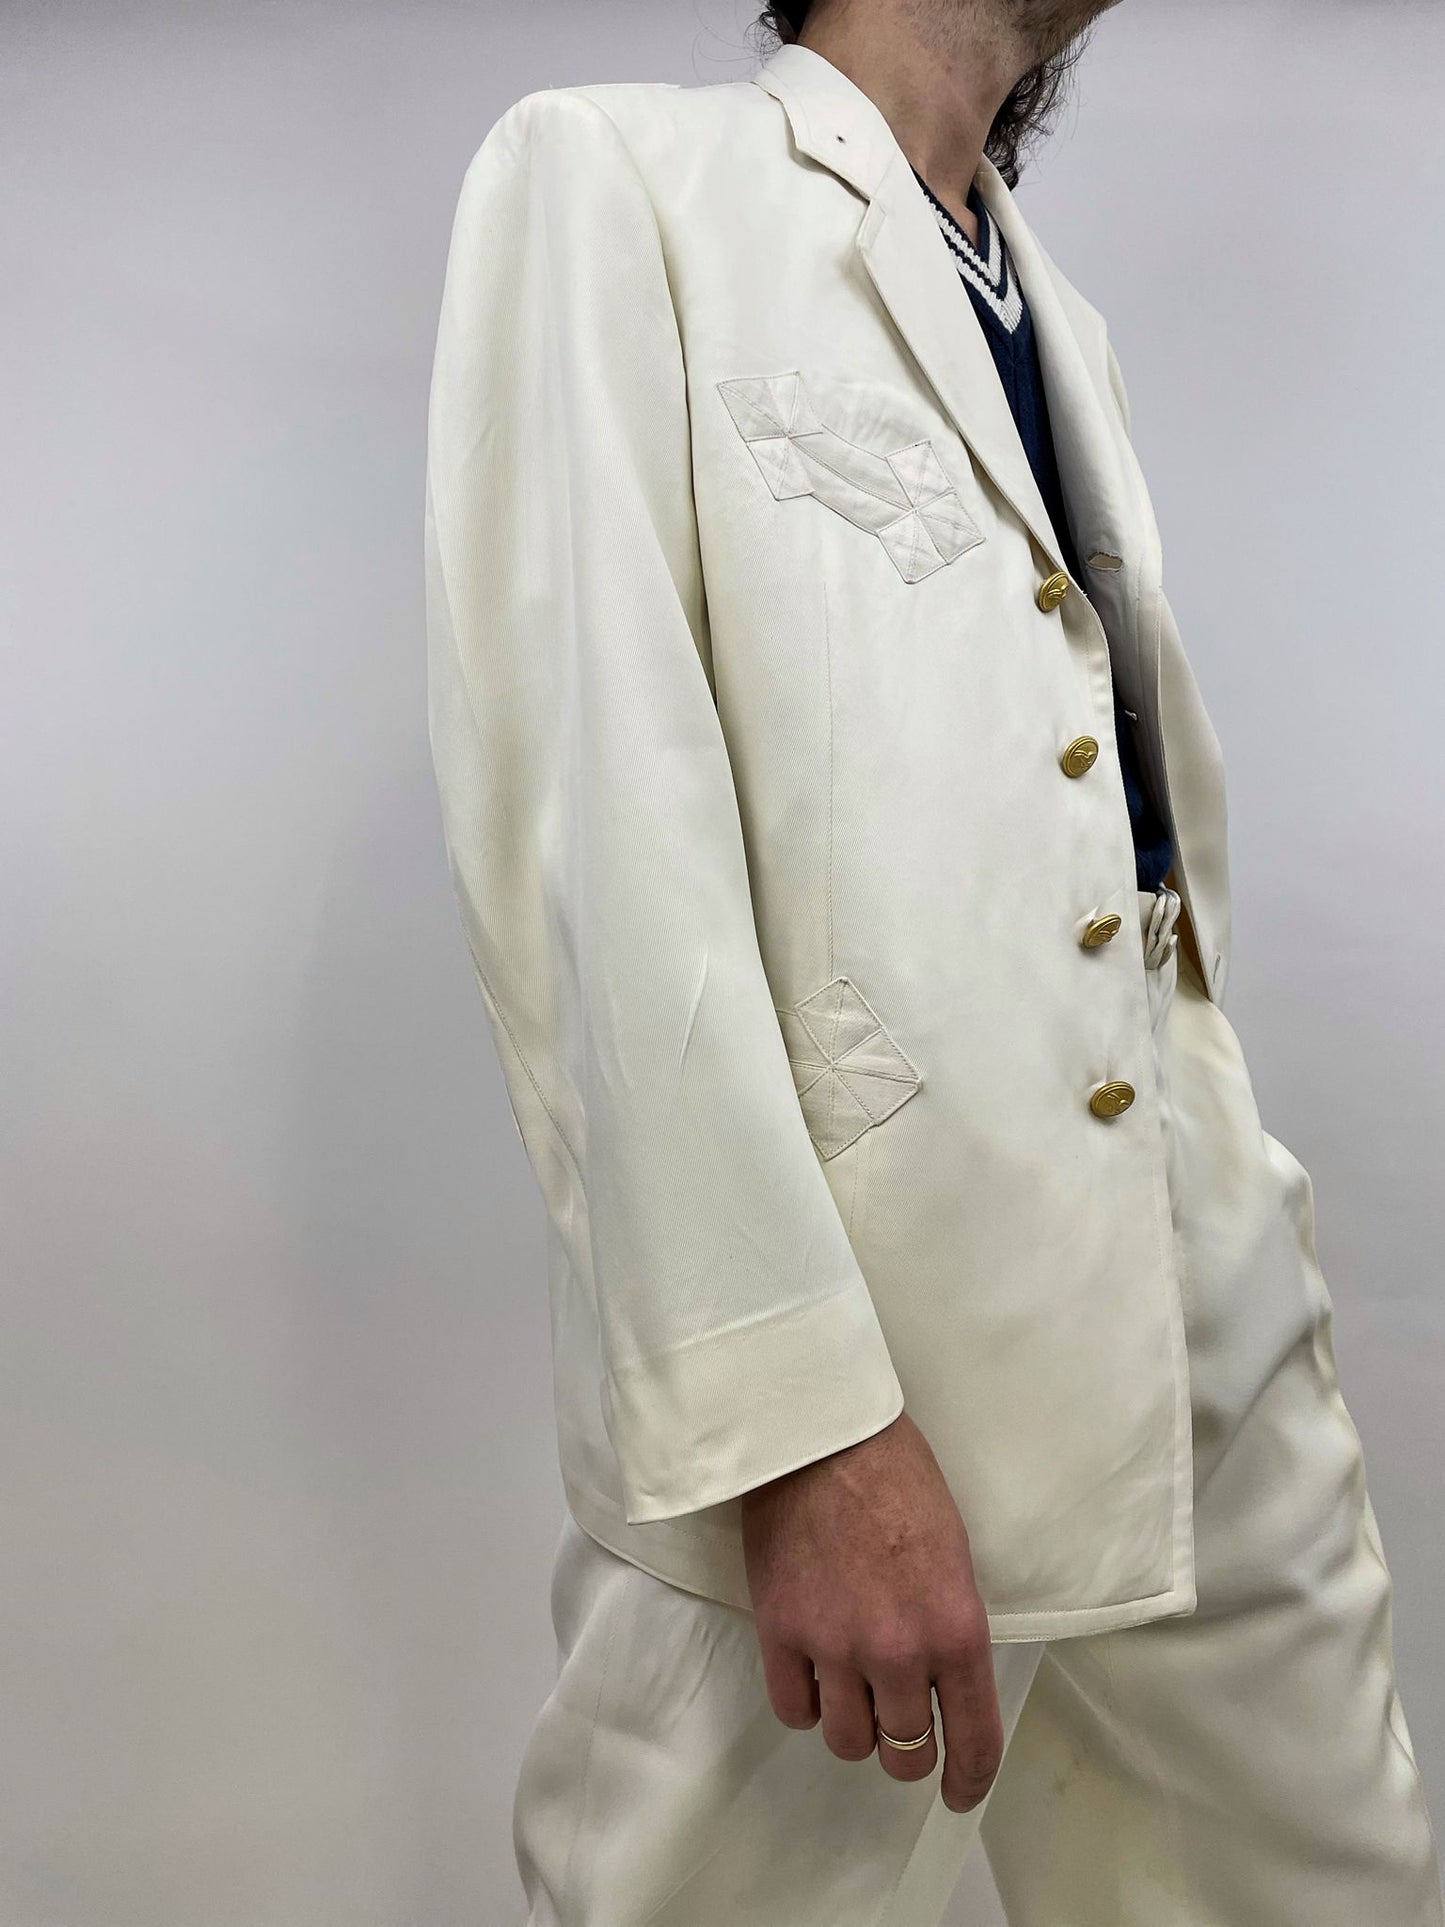 Navy suit - Bennici tailoring